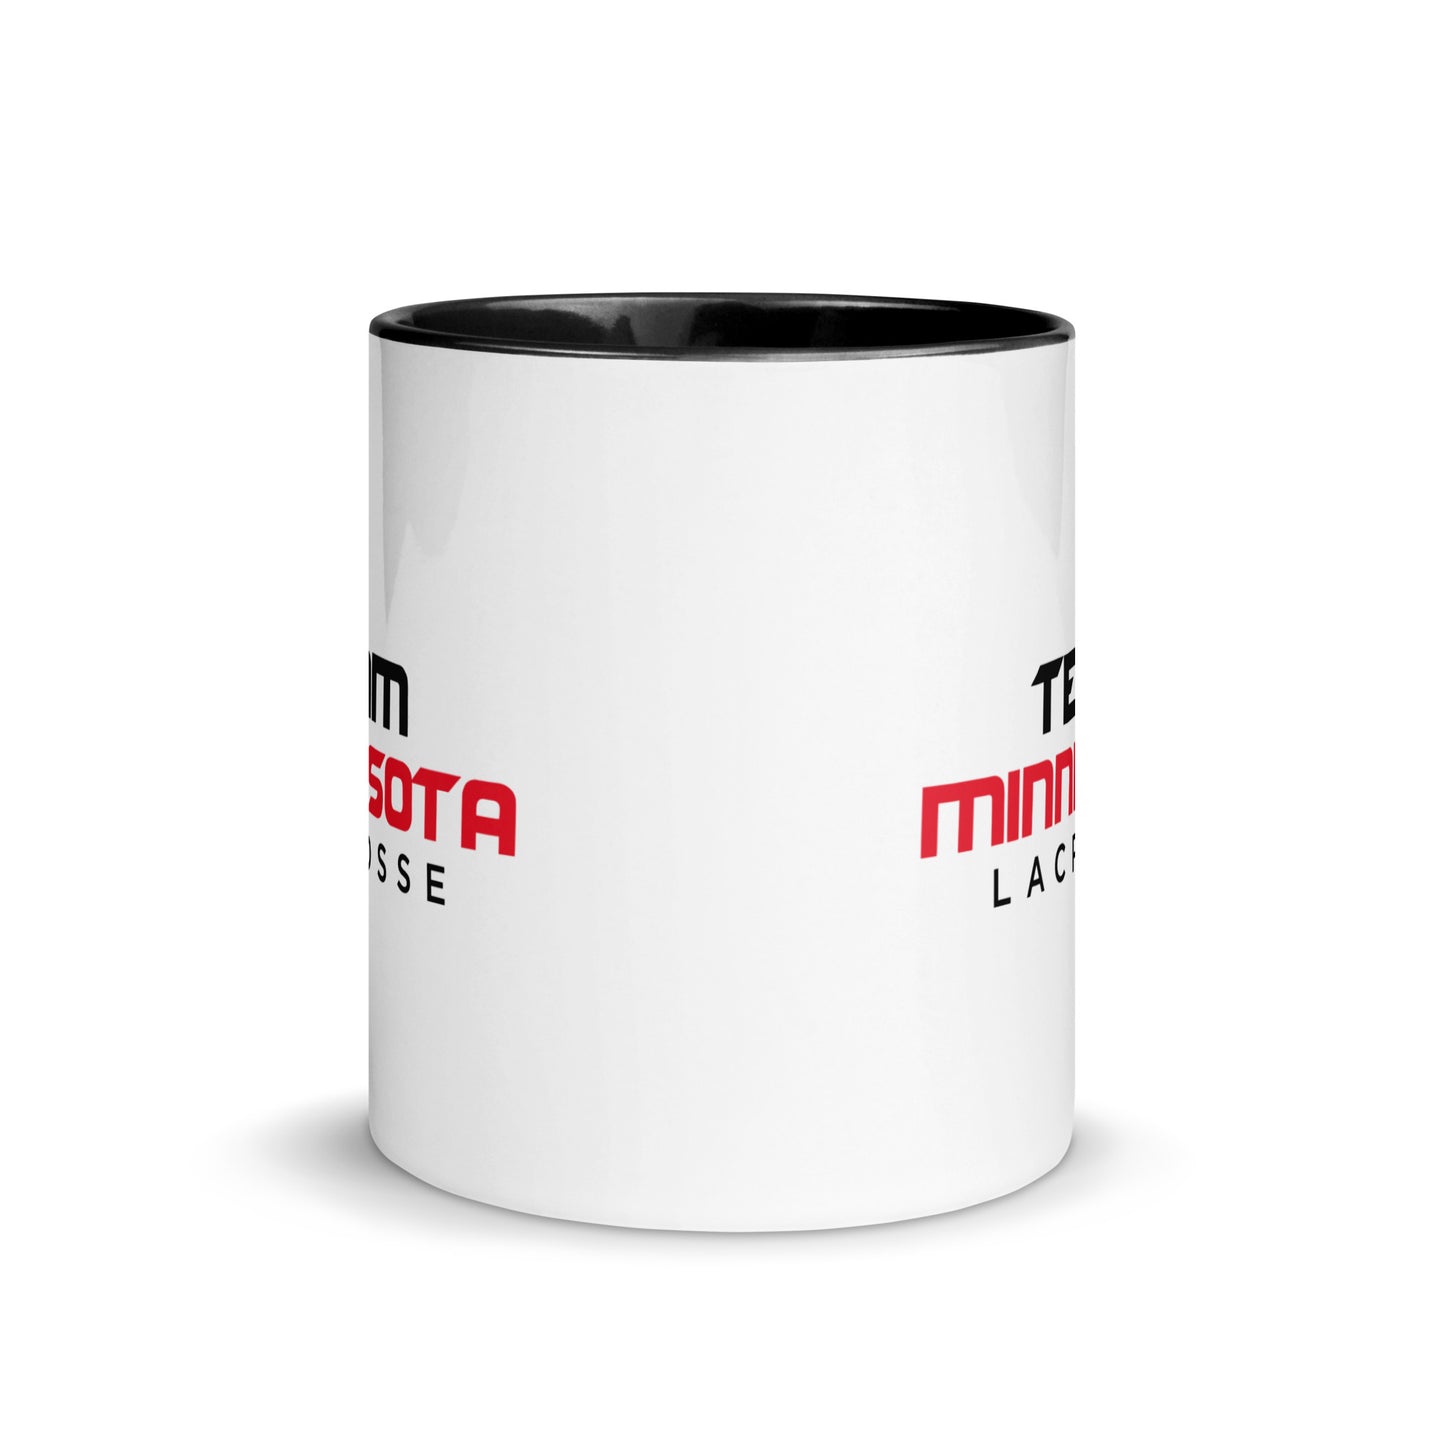 Team Minnesota - Mug with Color Inside